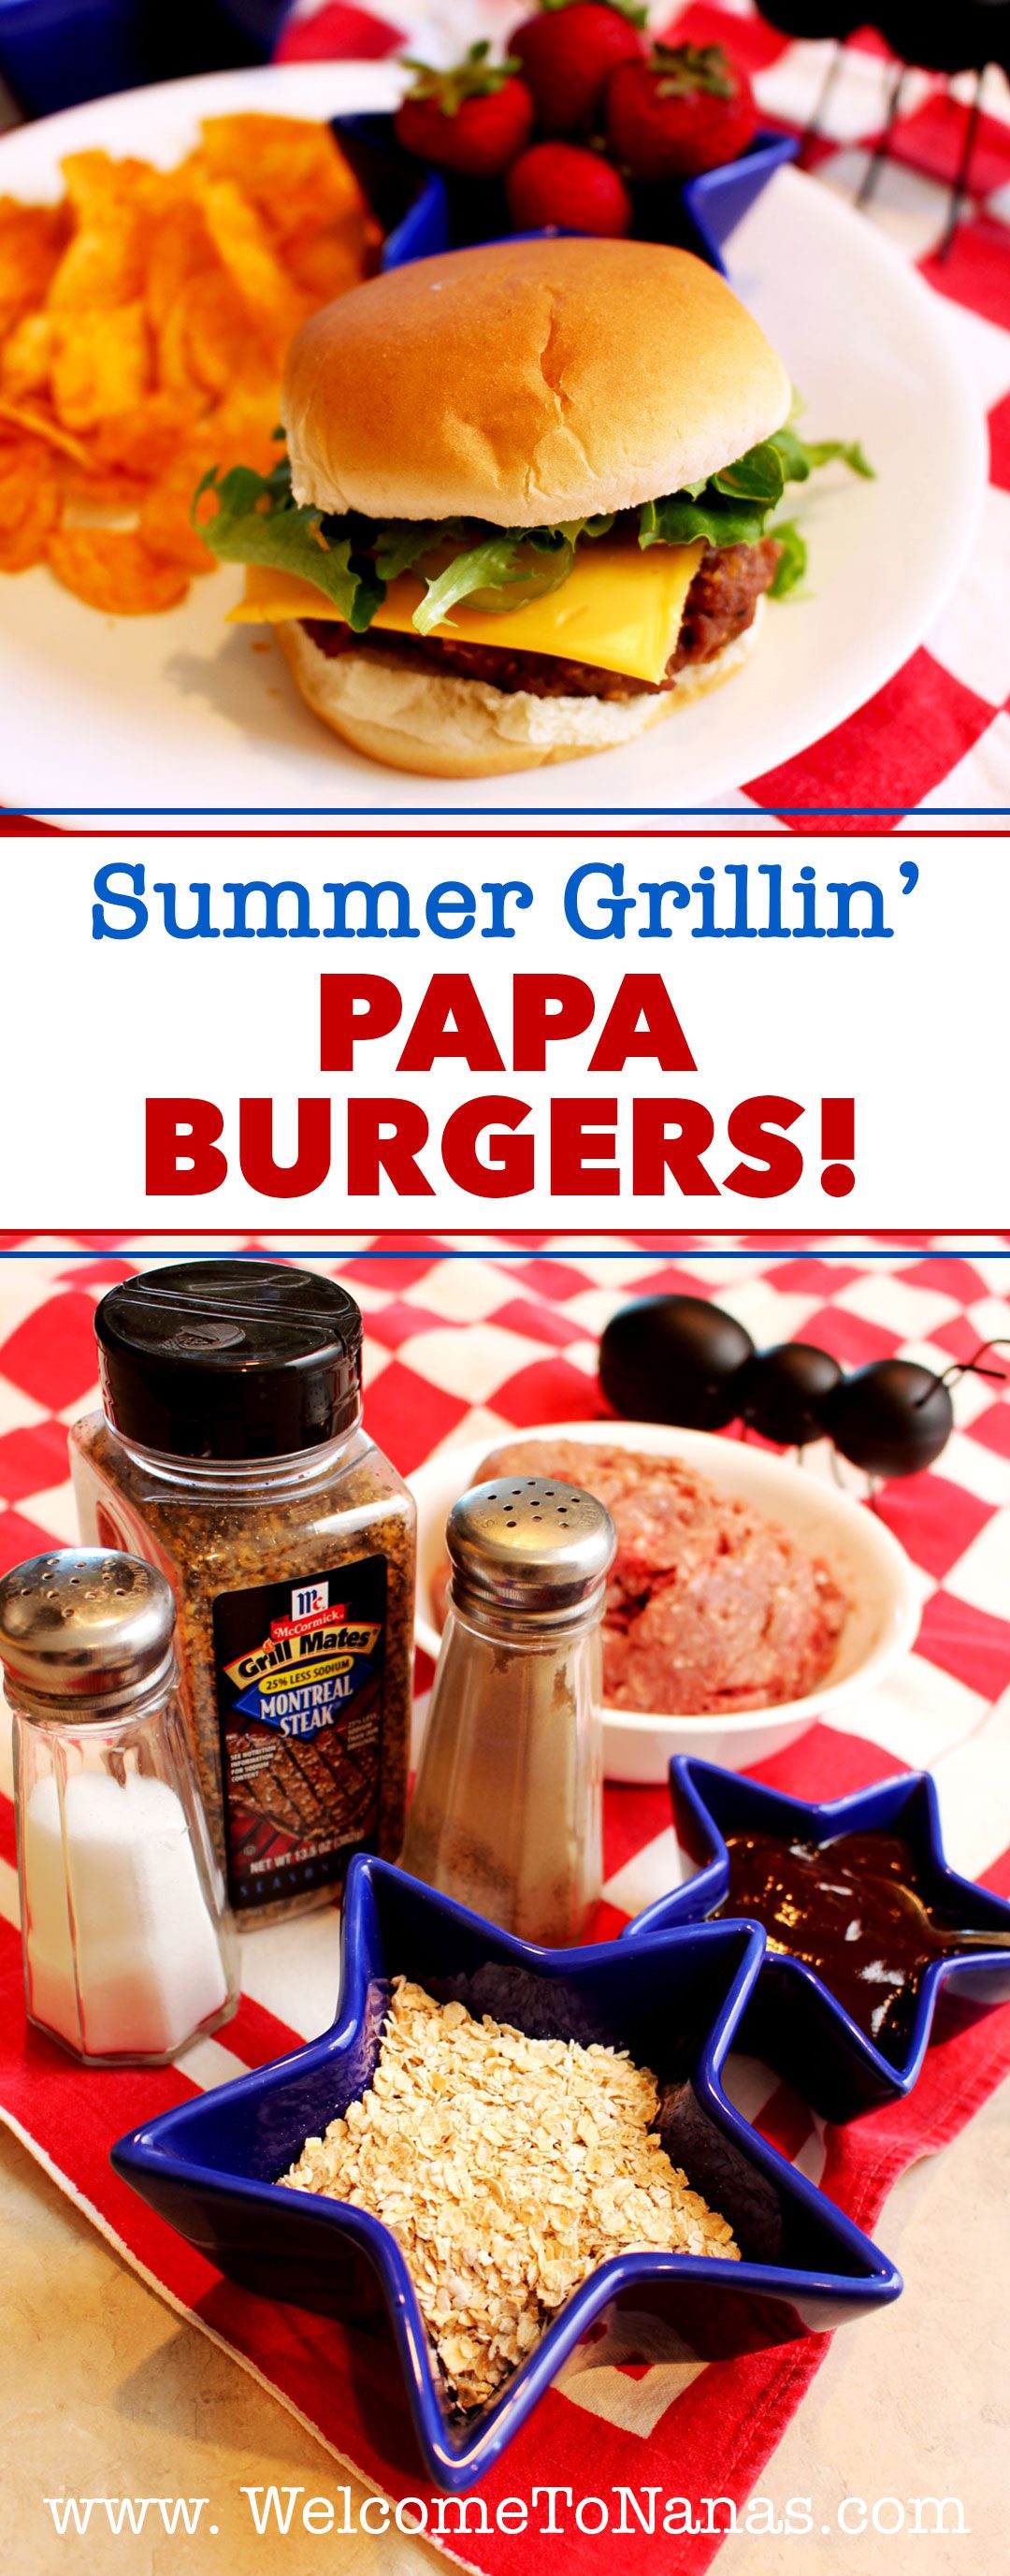 Papa Burger Recipe: How to Make It